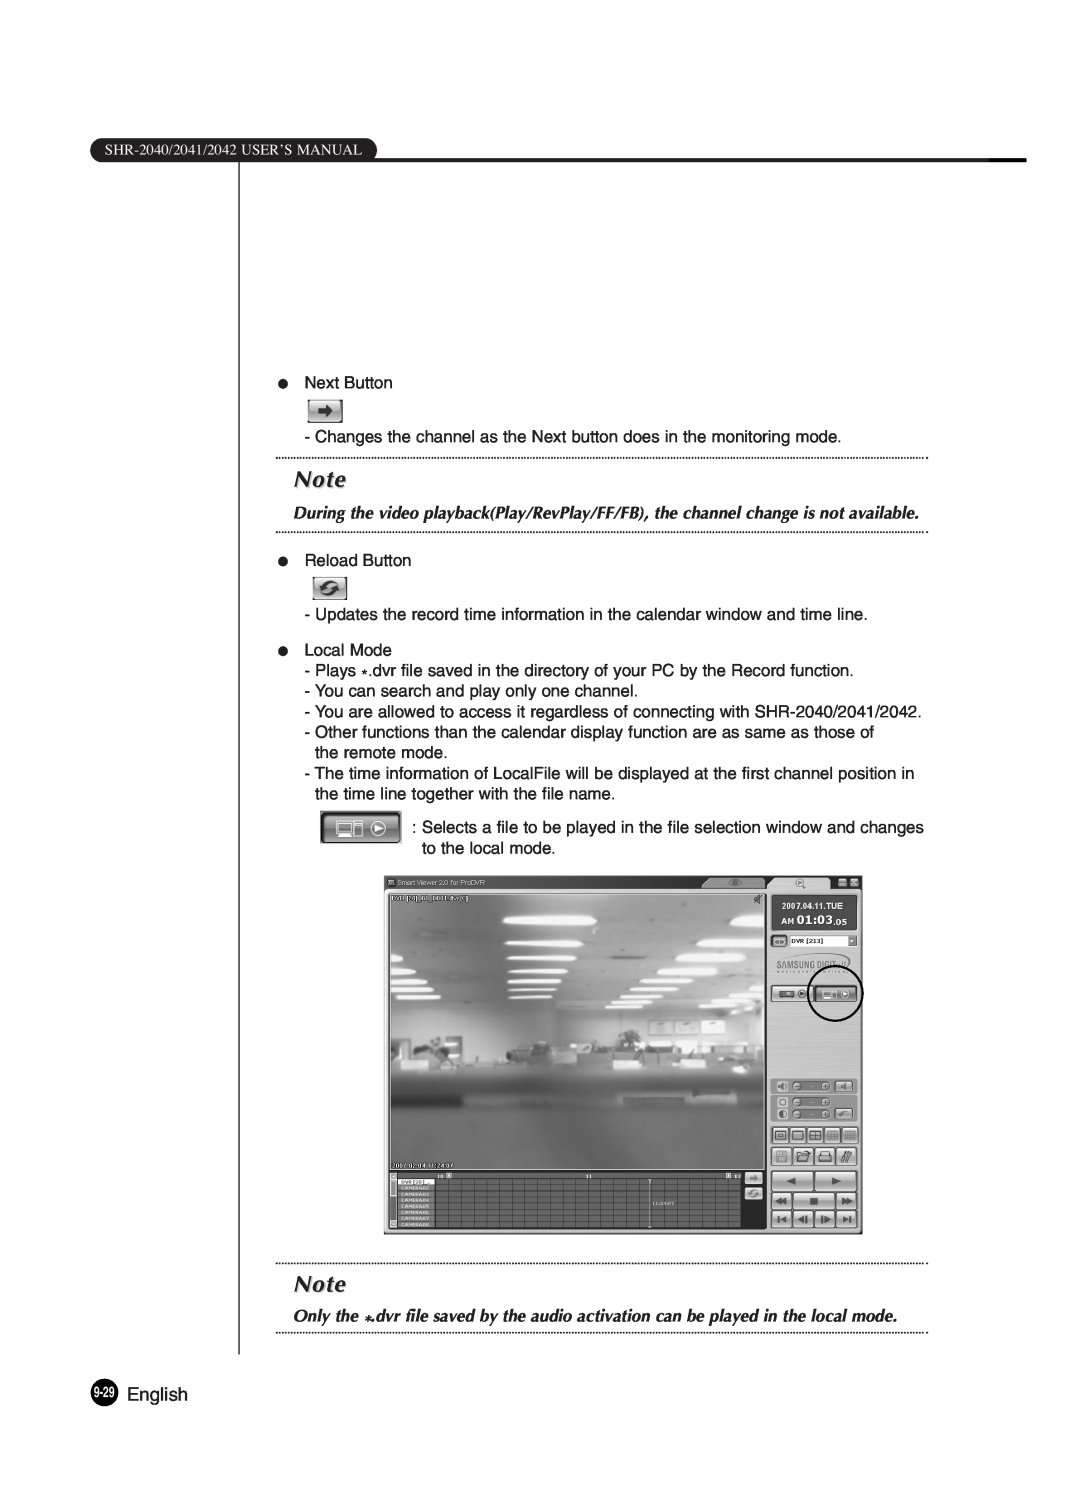 Samsung SHR-2042P250, SHR-2040P250 manual English 